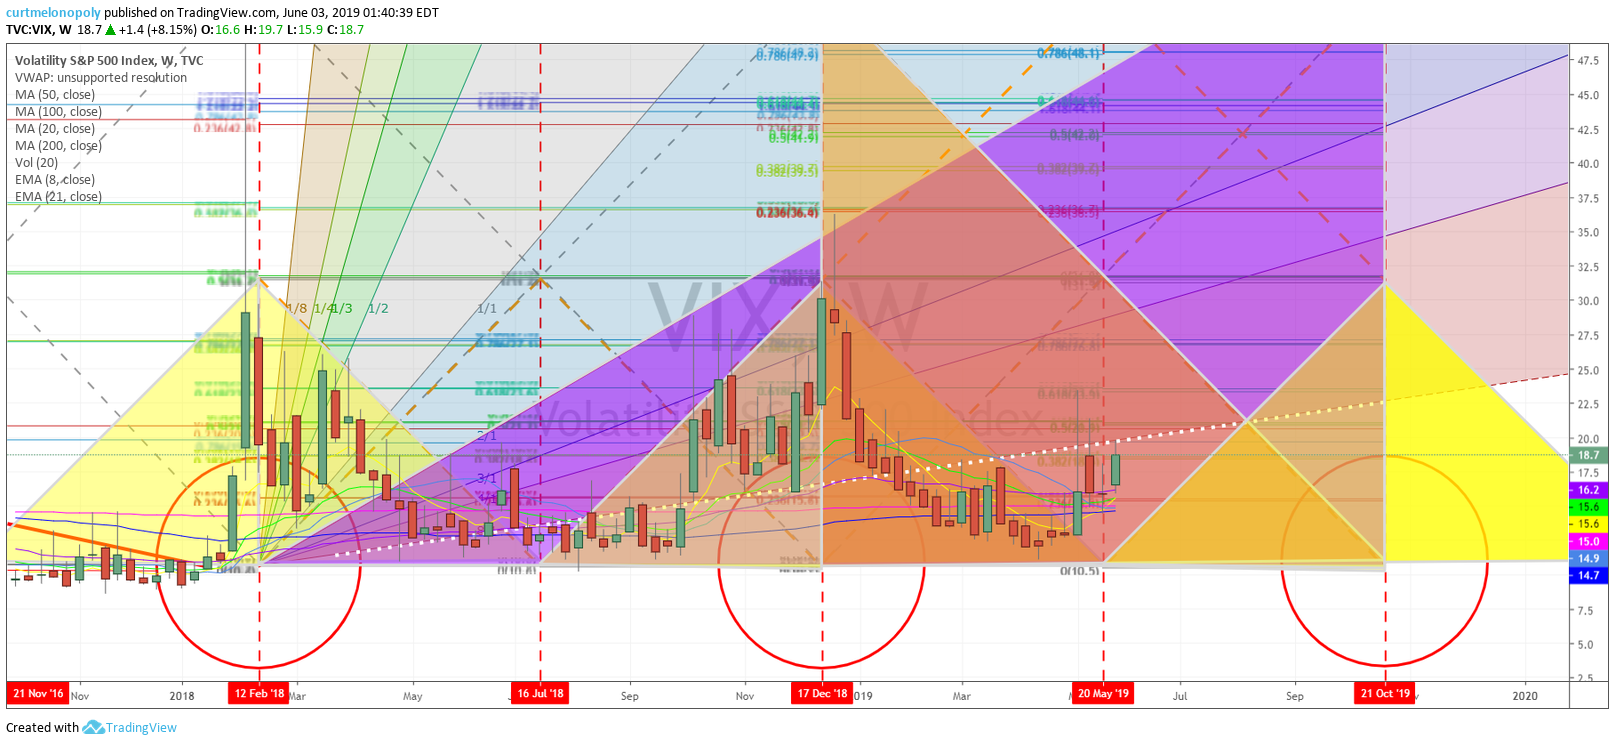 VIX, volatility, time cycle, trade, chart